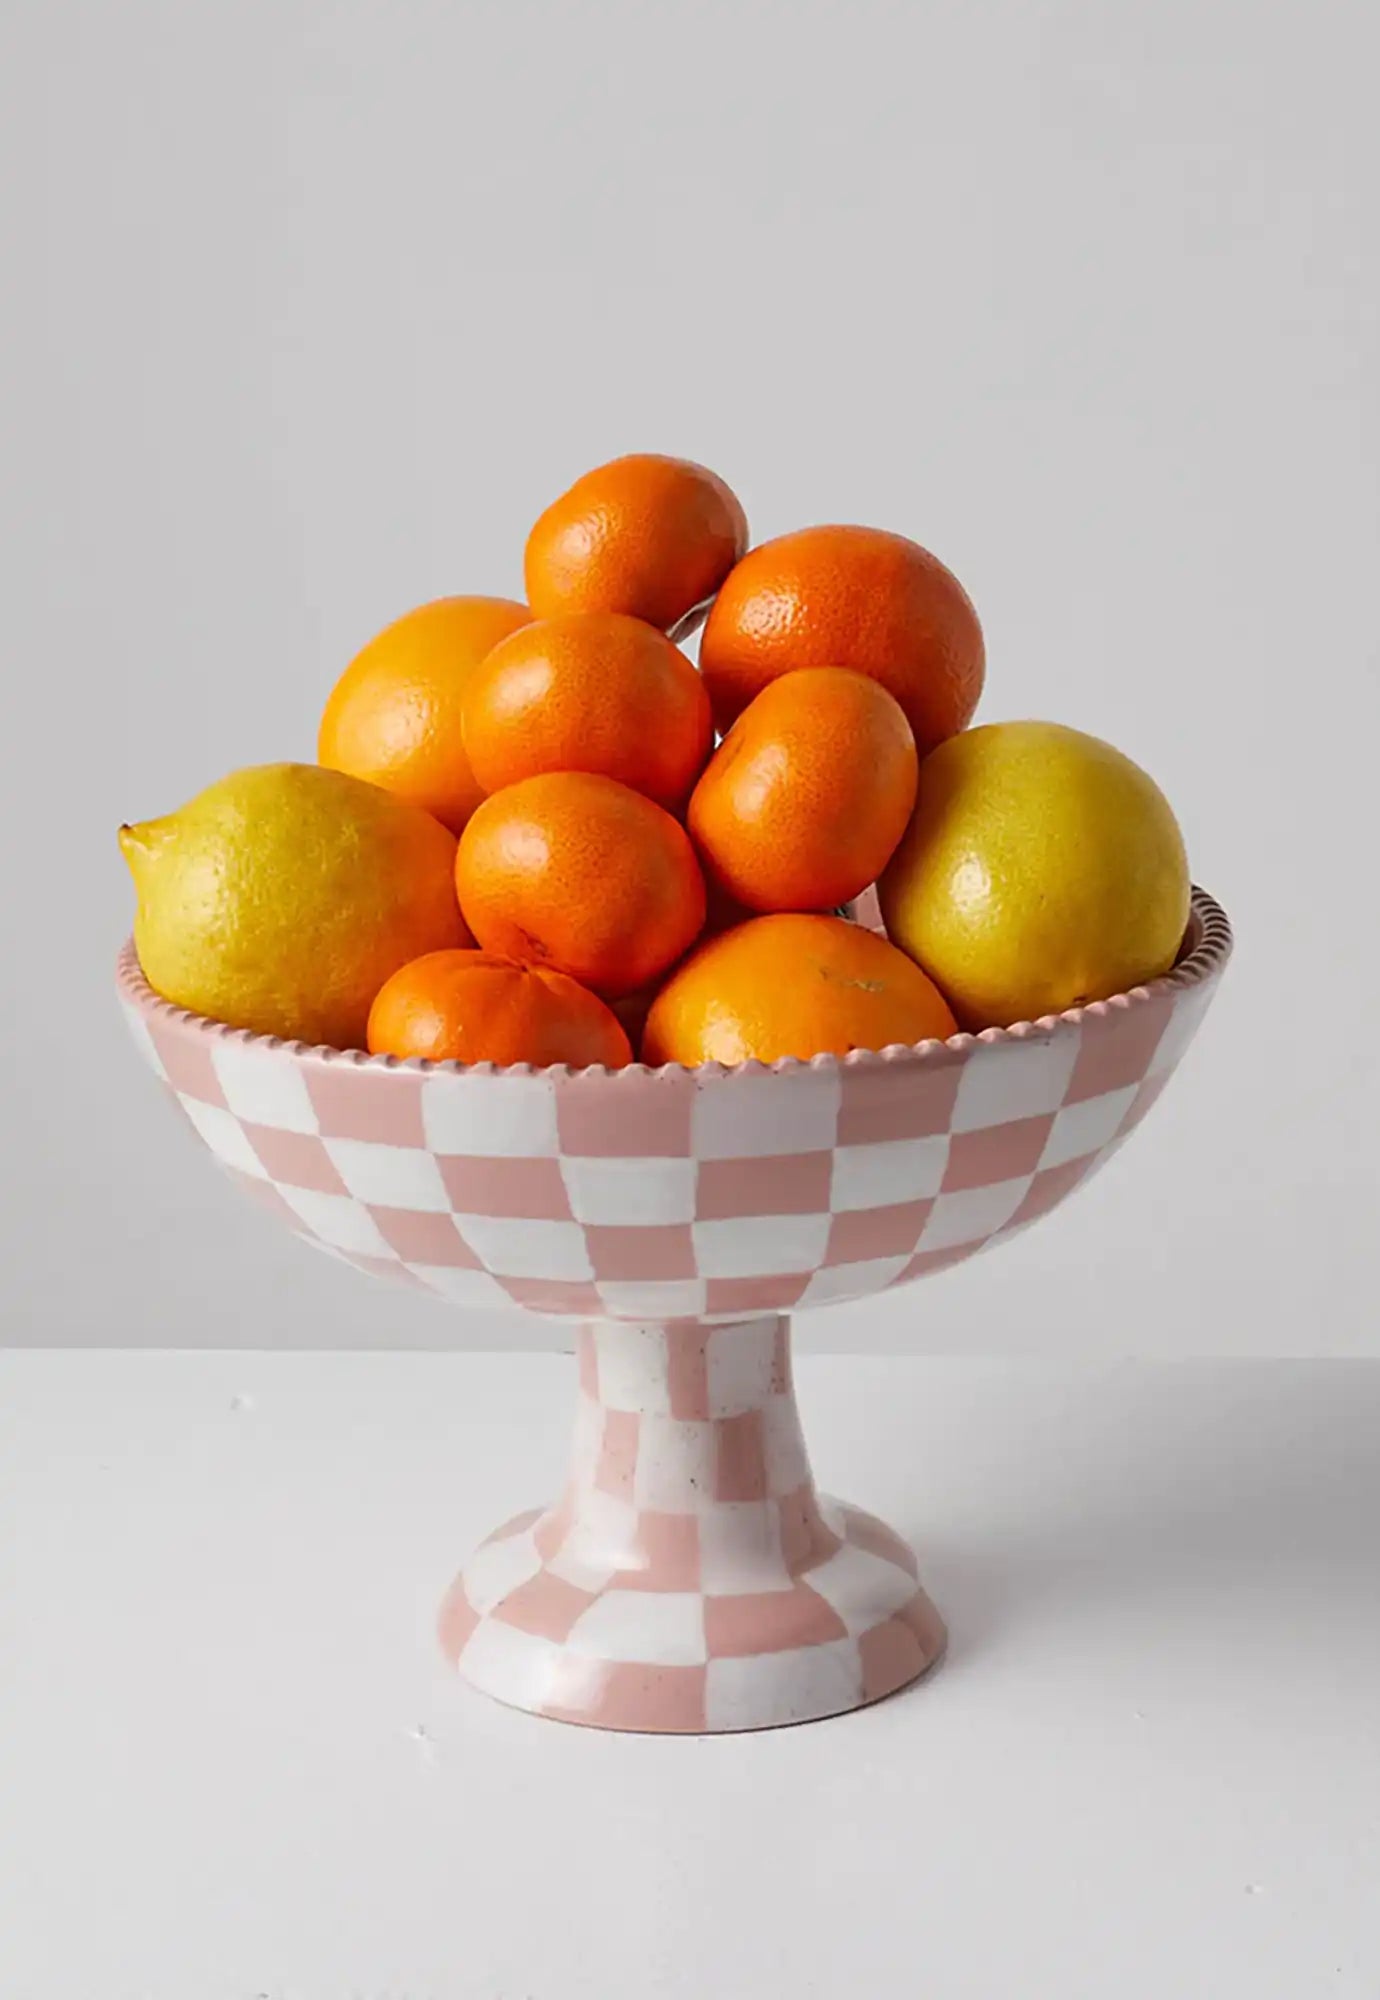 kip&co - checkered fruit bowl